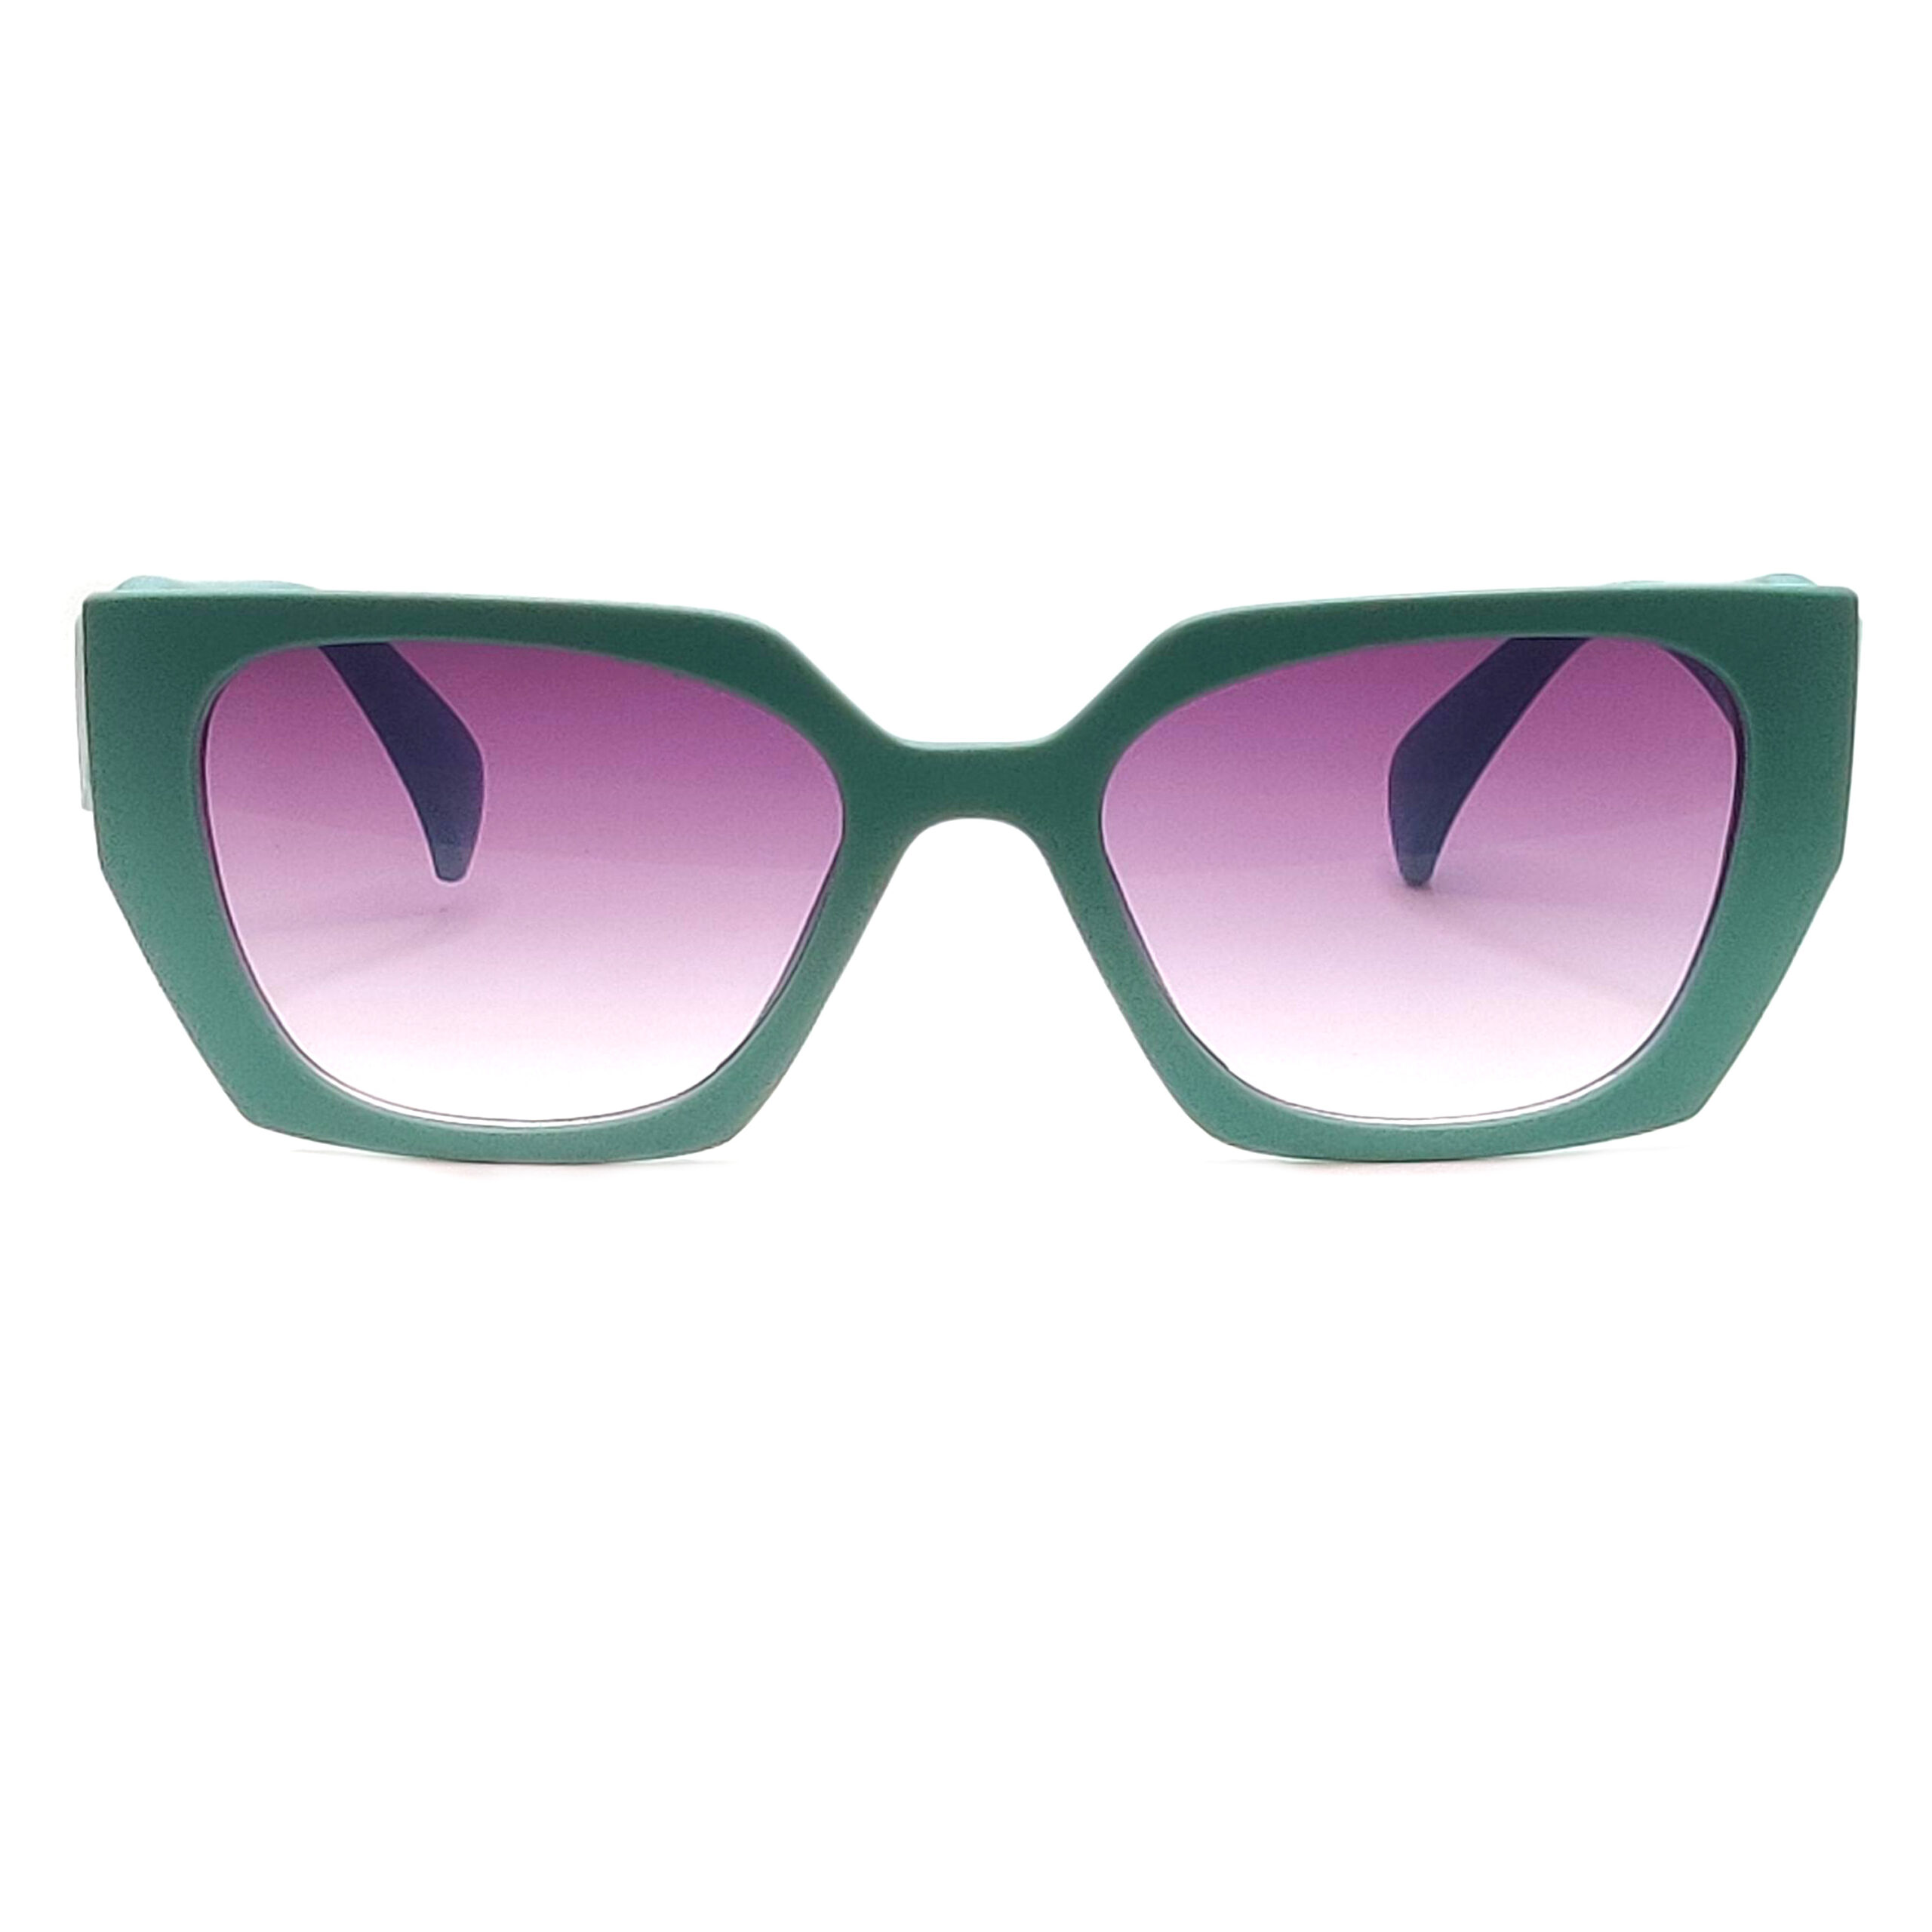 Buy geometric sunglasses online at chashmah.com